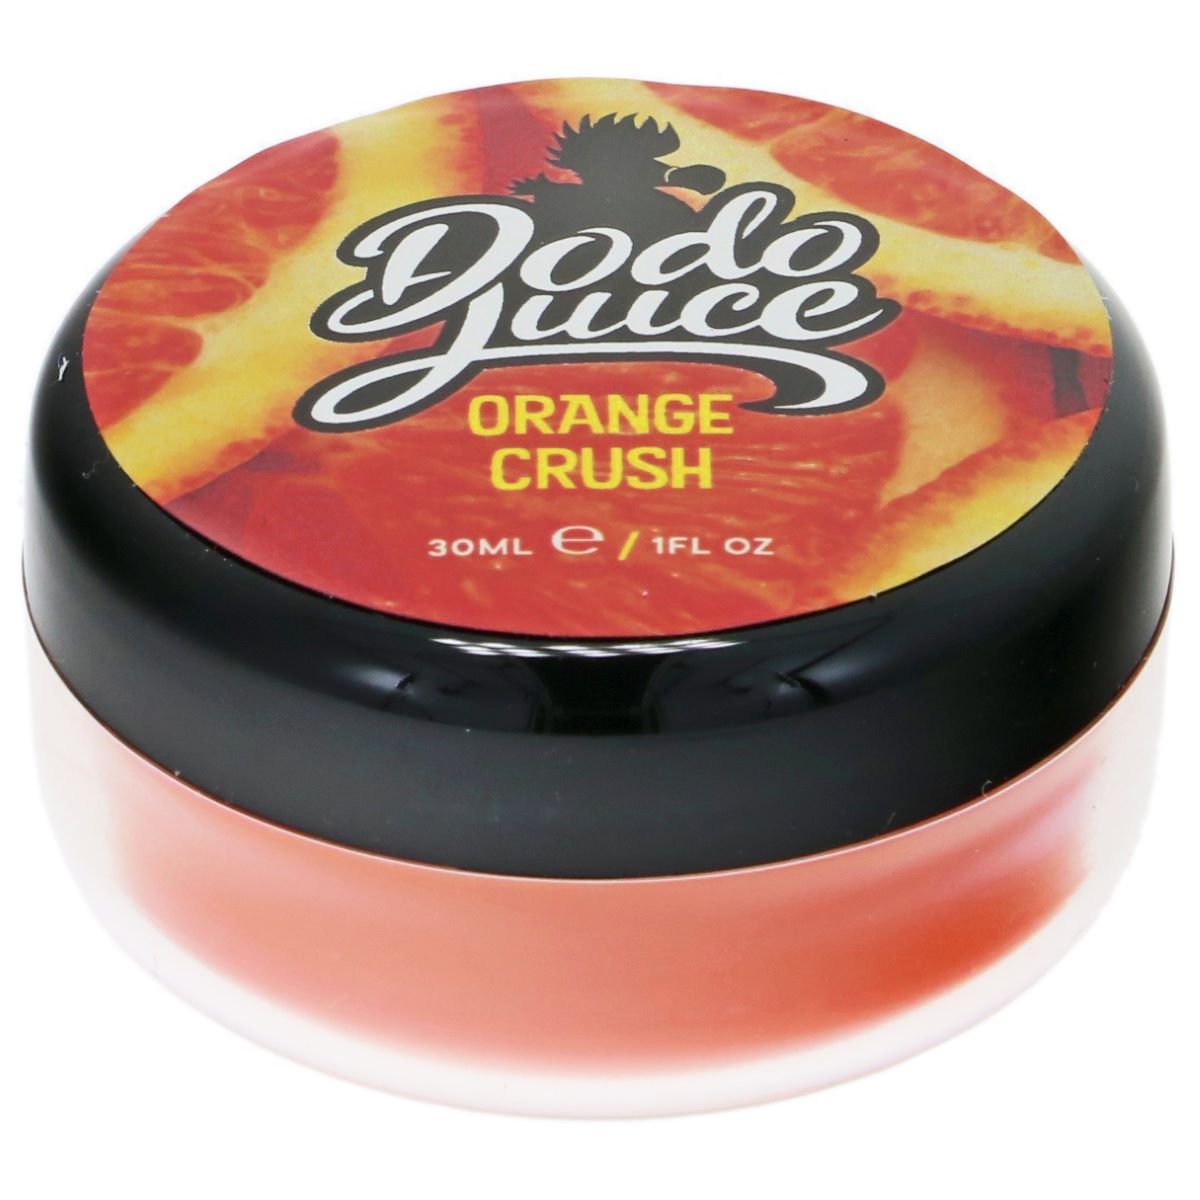 Orange Crush soft wax for warm coloured cars - 30ml